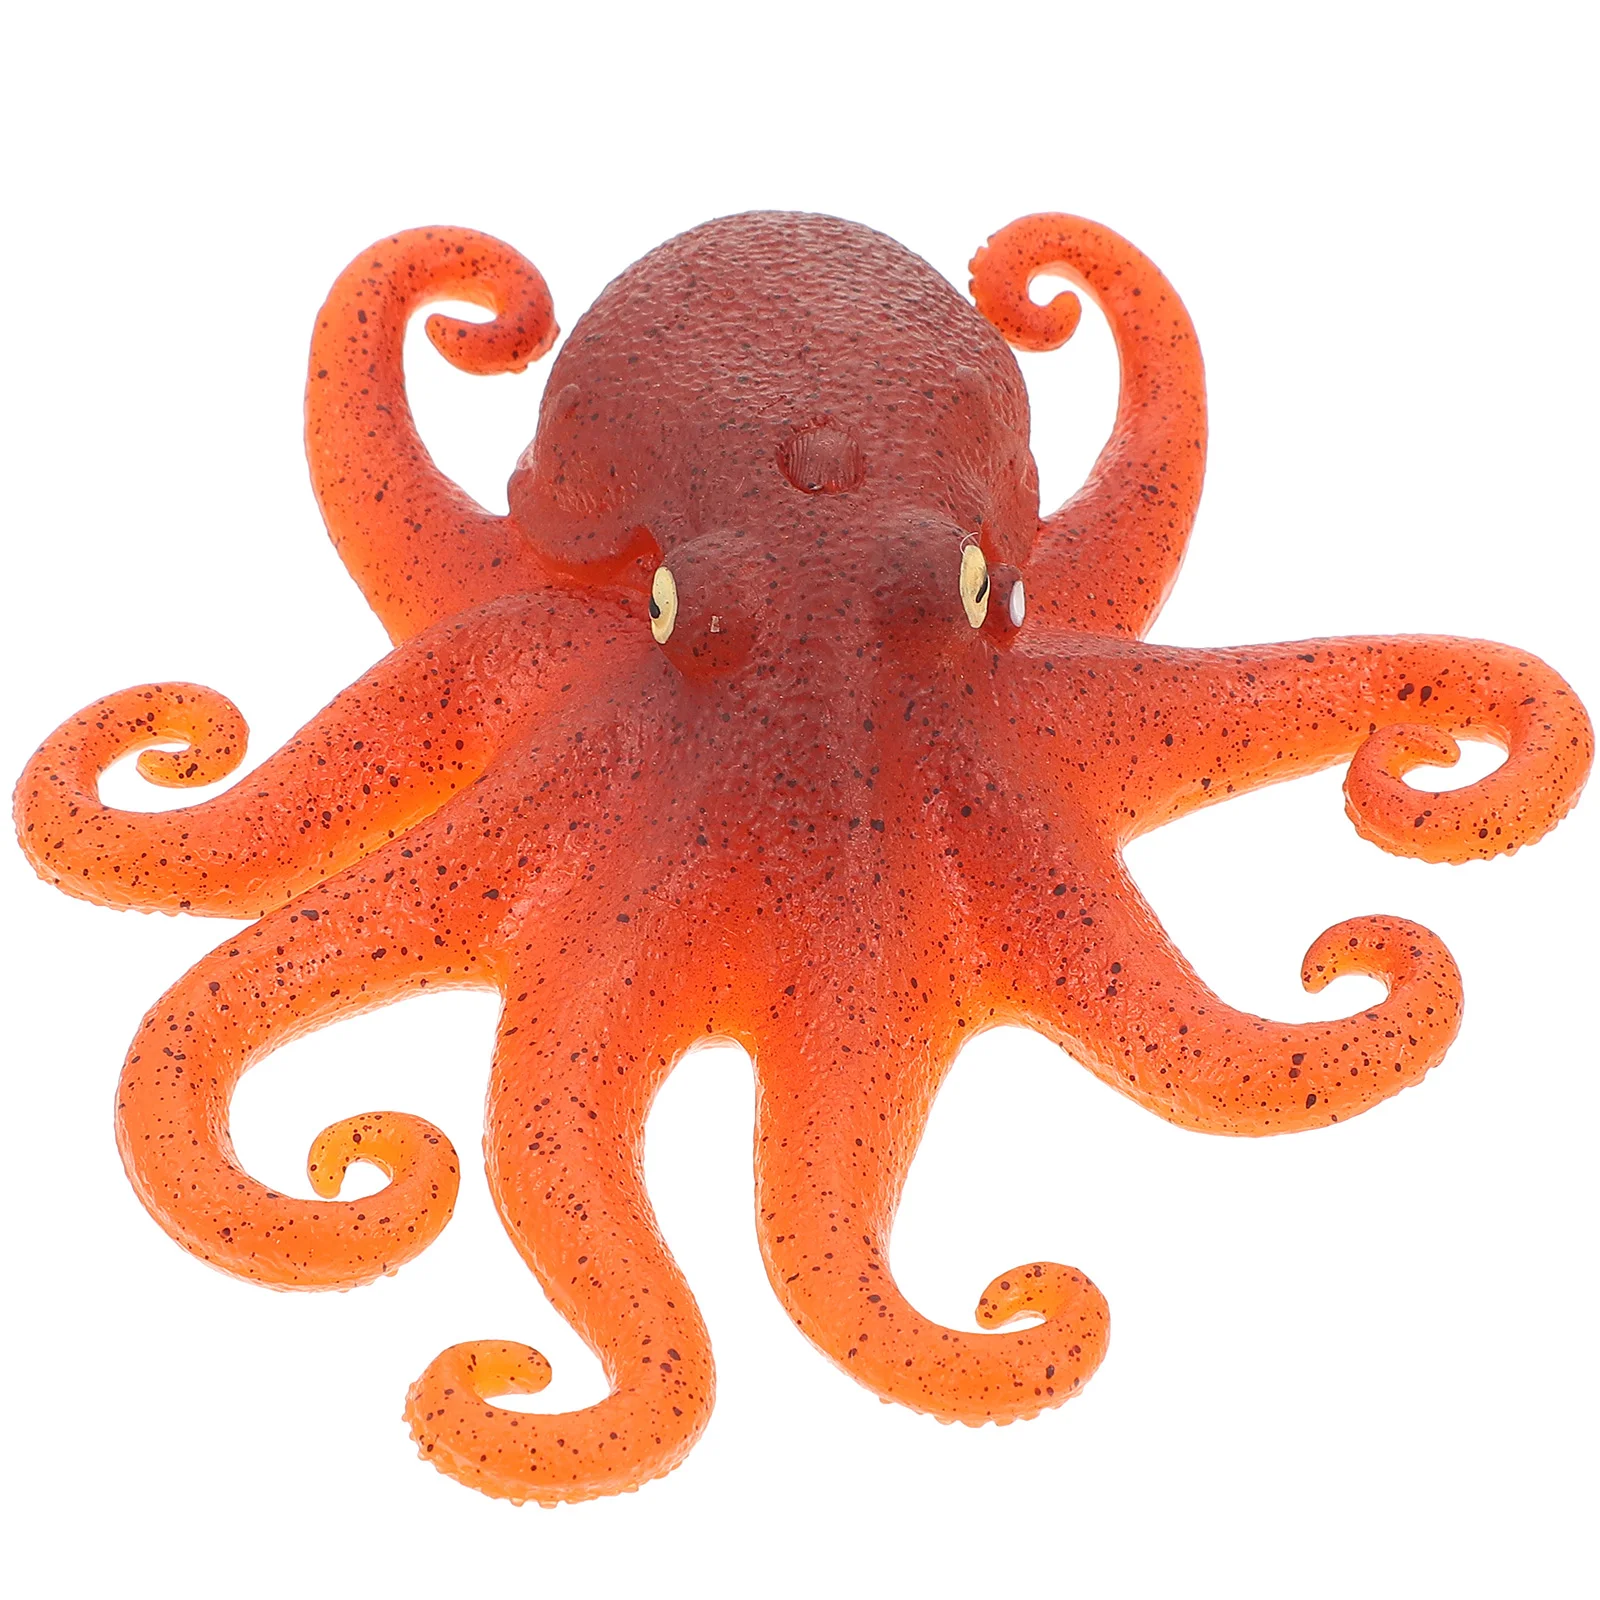 

Octopus Toy Sea Animal Toys Model Animals Figurine Rubber Life Creature Sensory Figures Ocean Figure Figurines Underwater Fidget